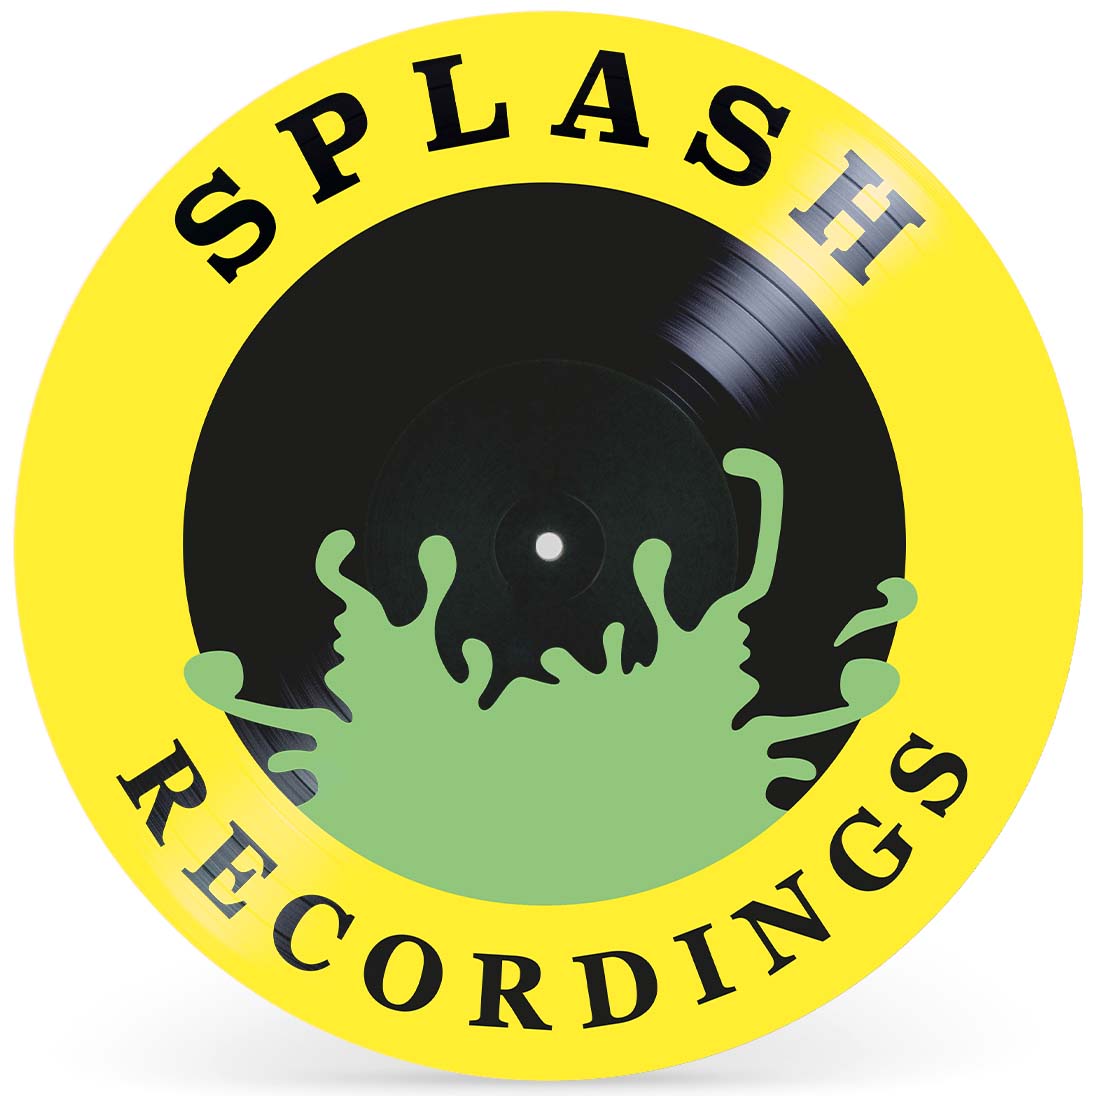 UNDERCOVER AGENT / DAZ 'SPLASH RECORDINGS SPECIAL' 12" (PICTURE DISC)